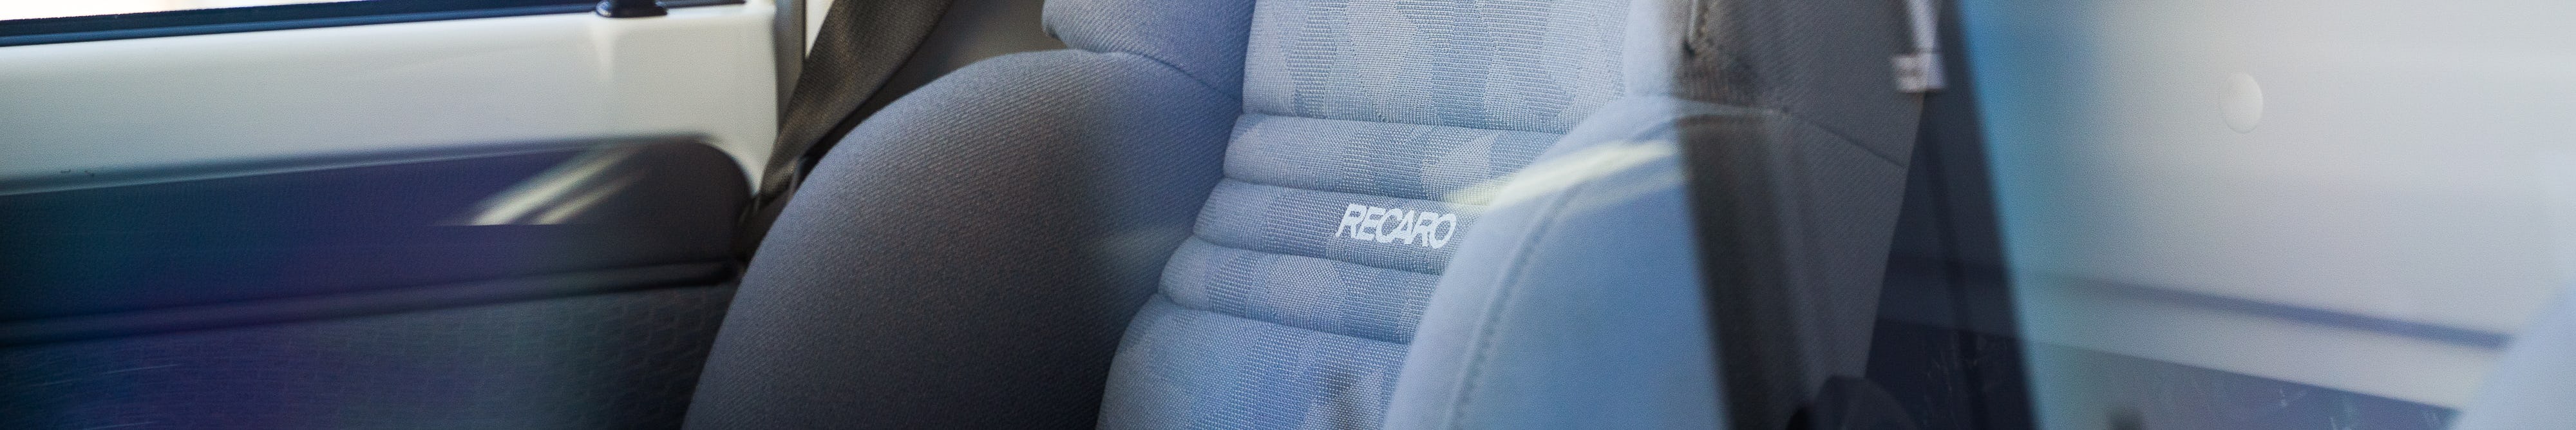 Recaro Expert M seats of custom 79 Series